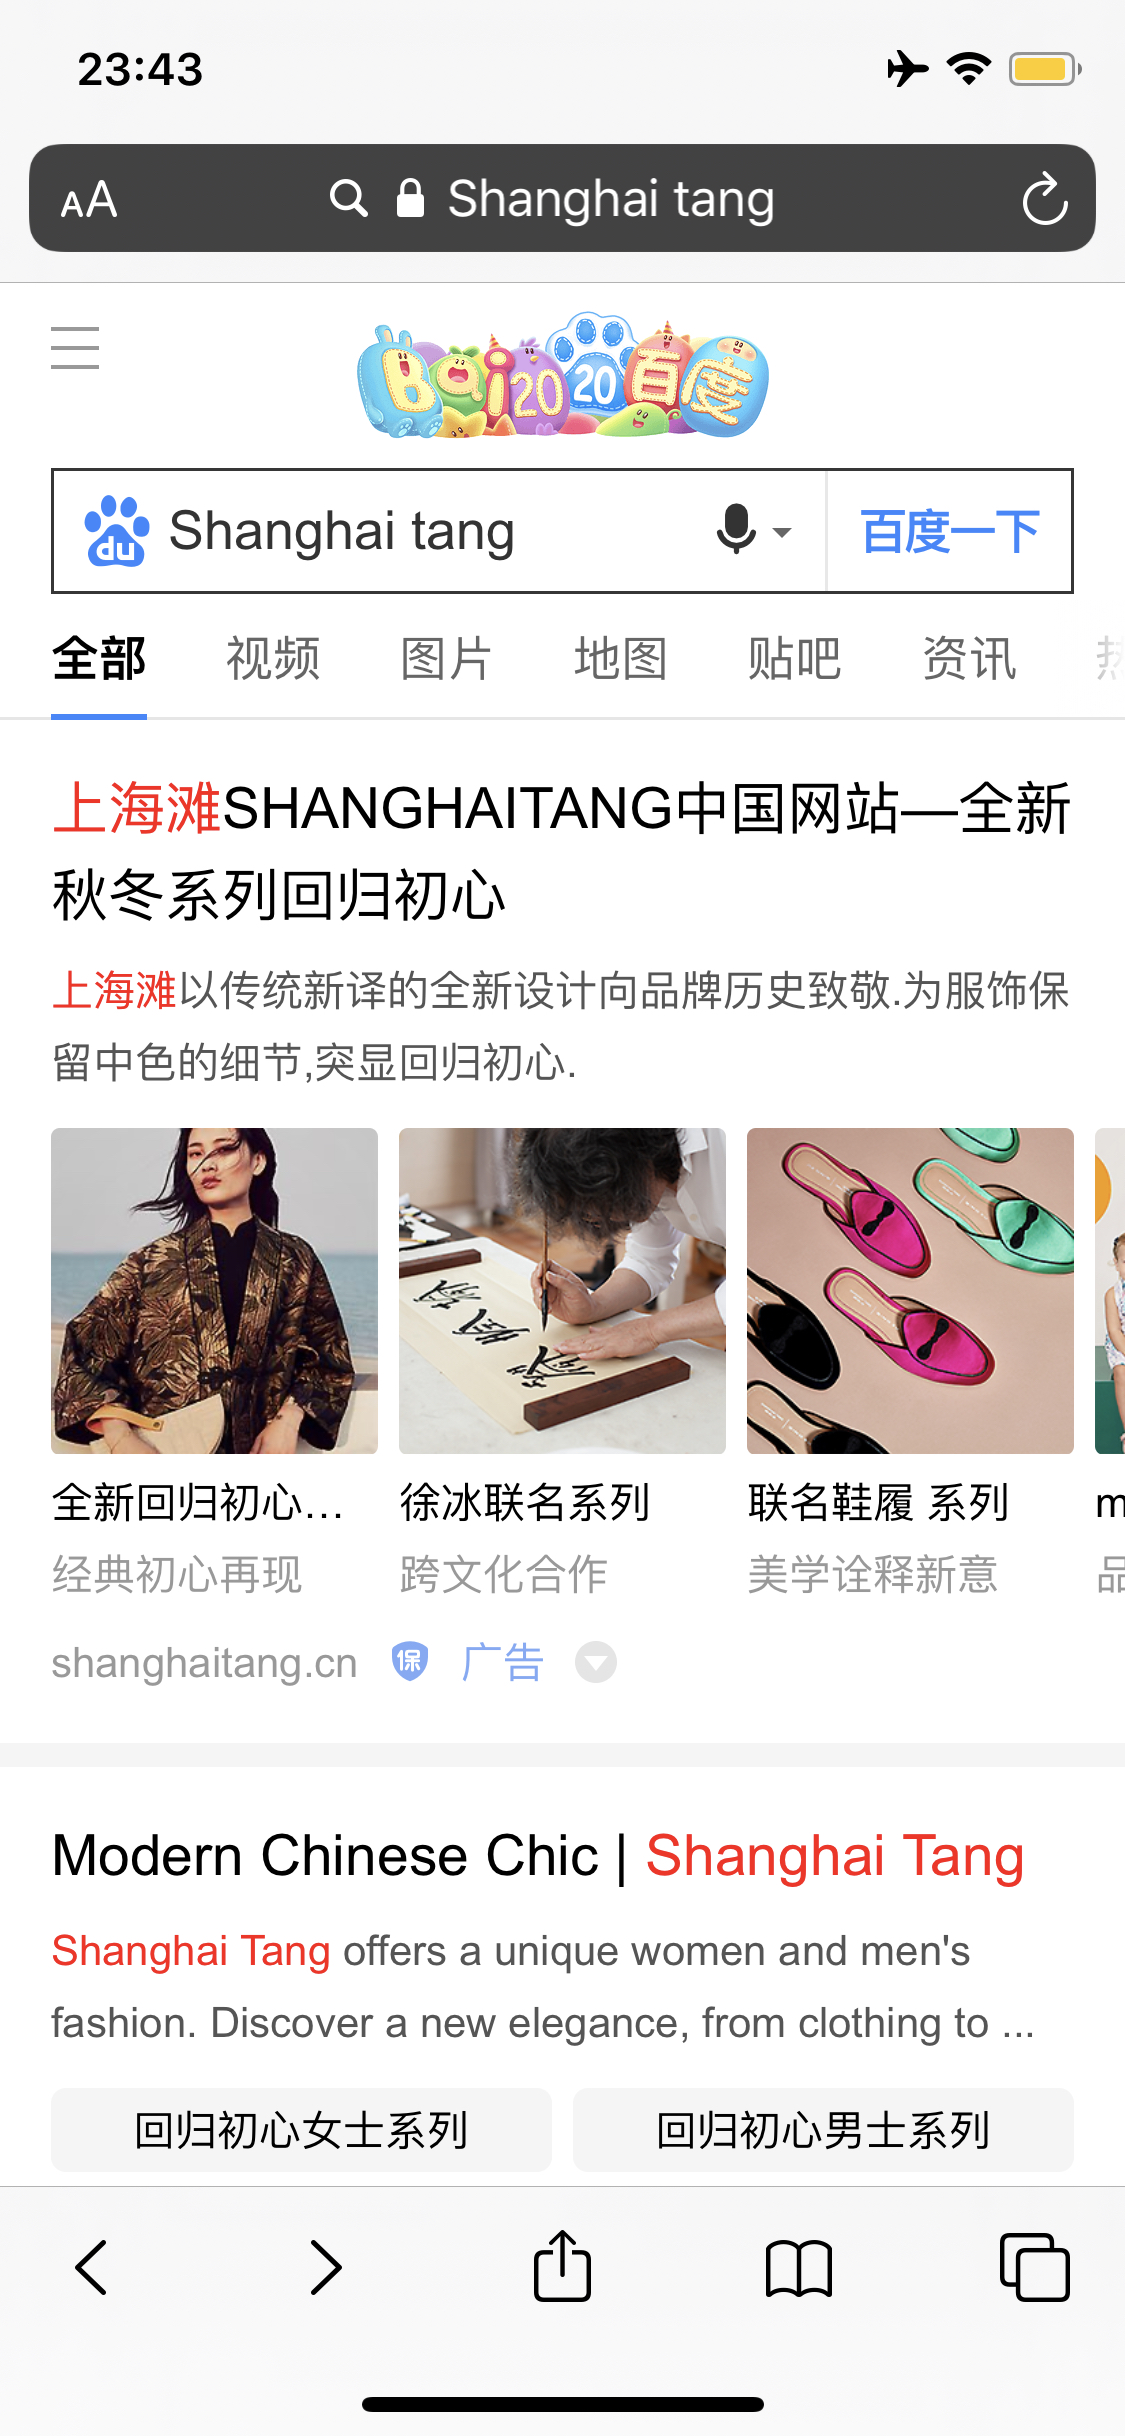 SHANGHAI TANG